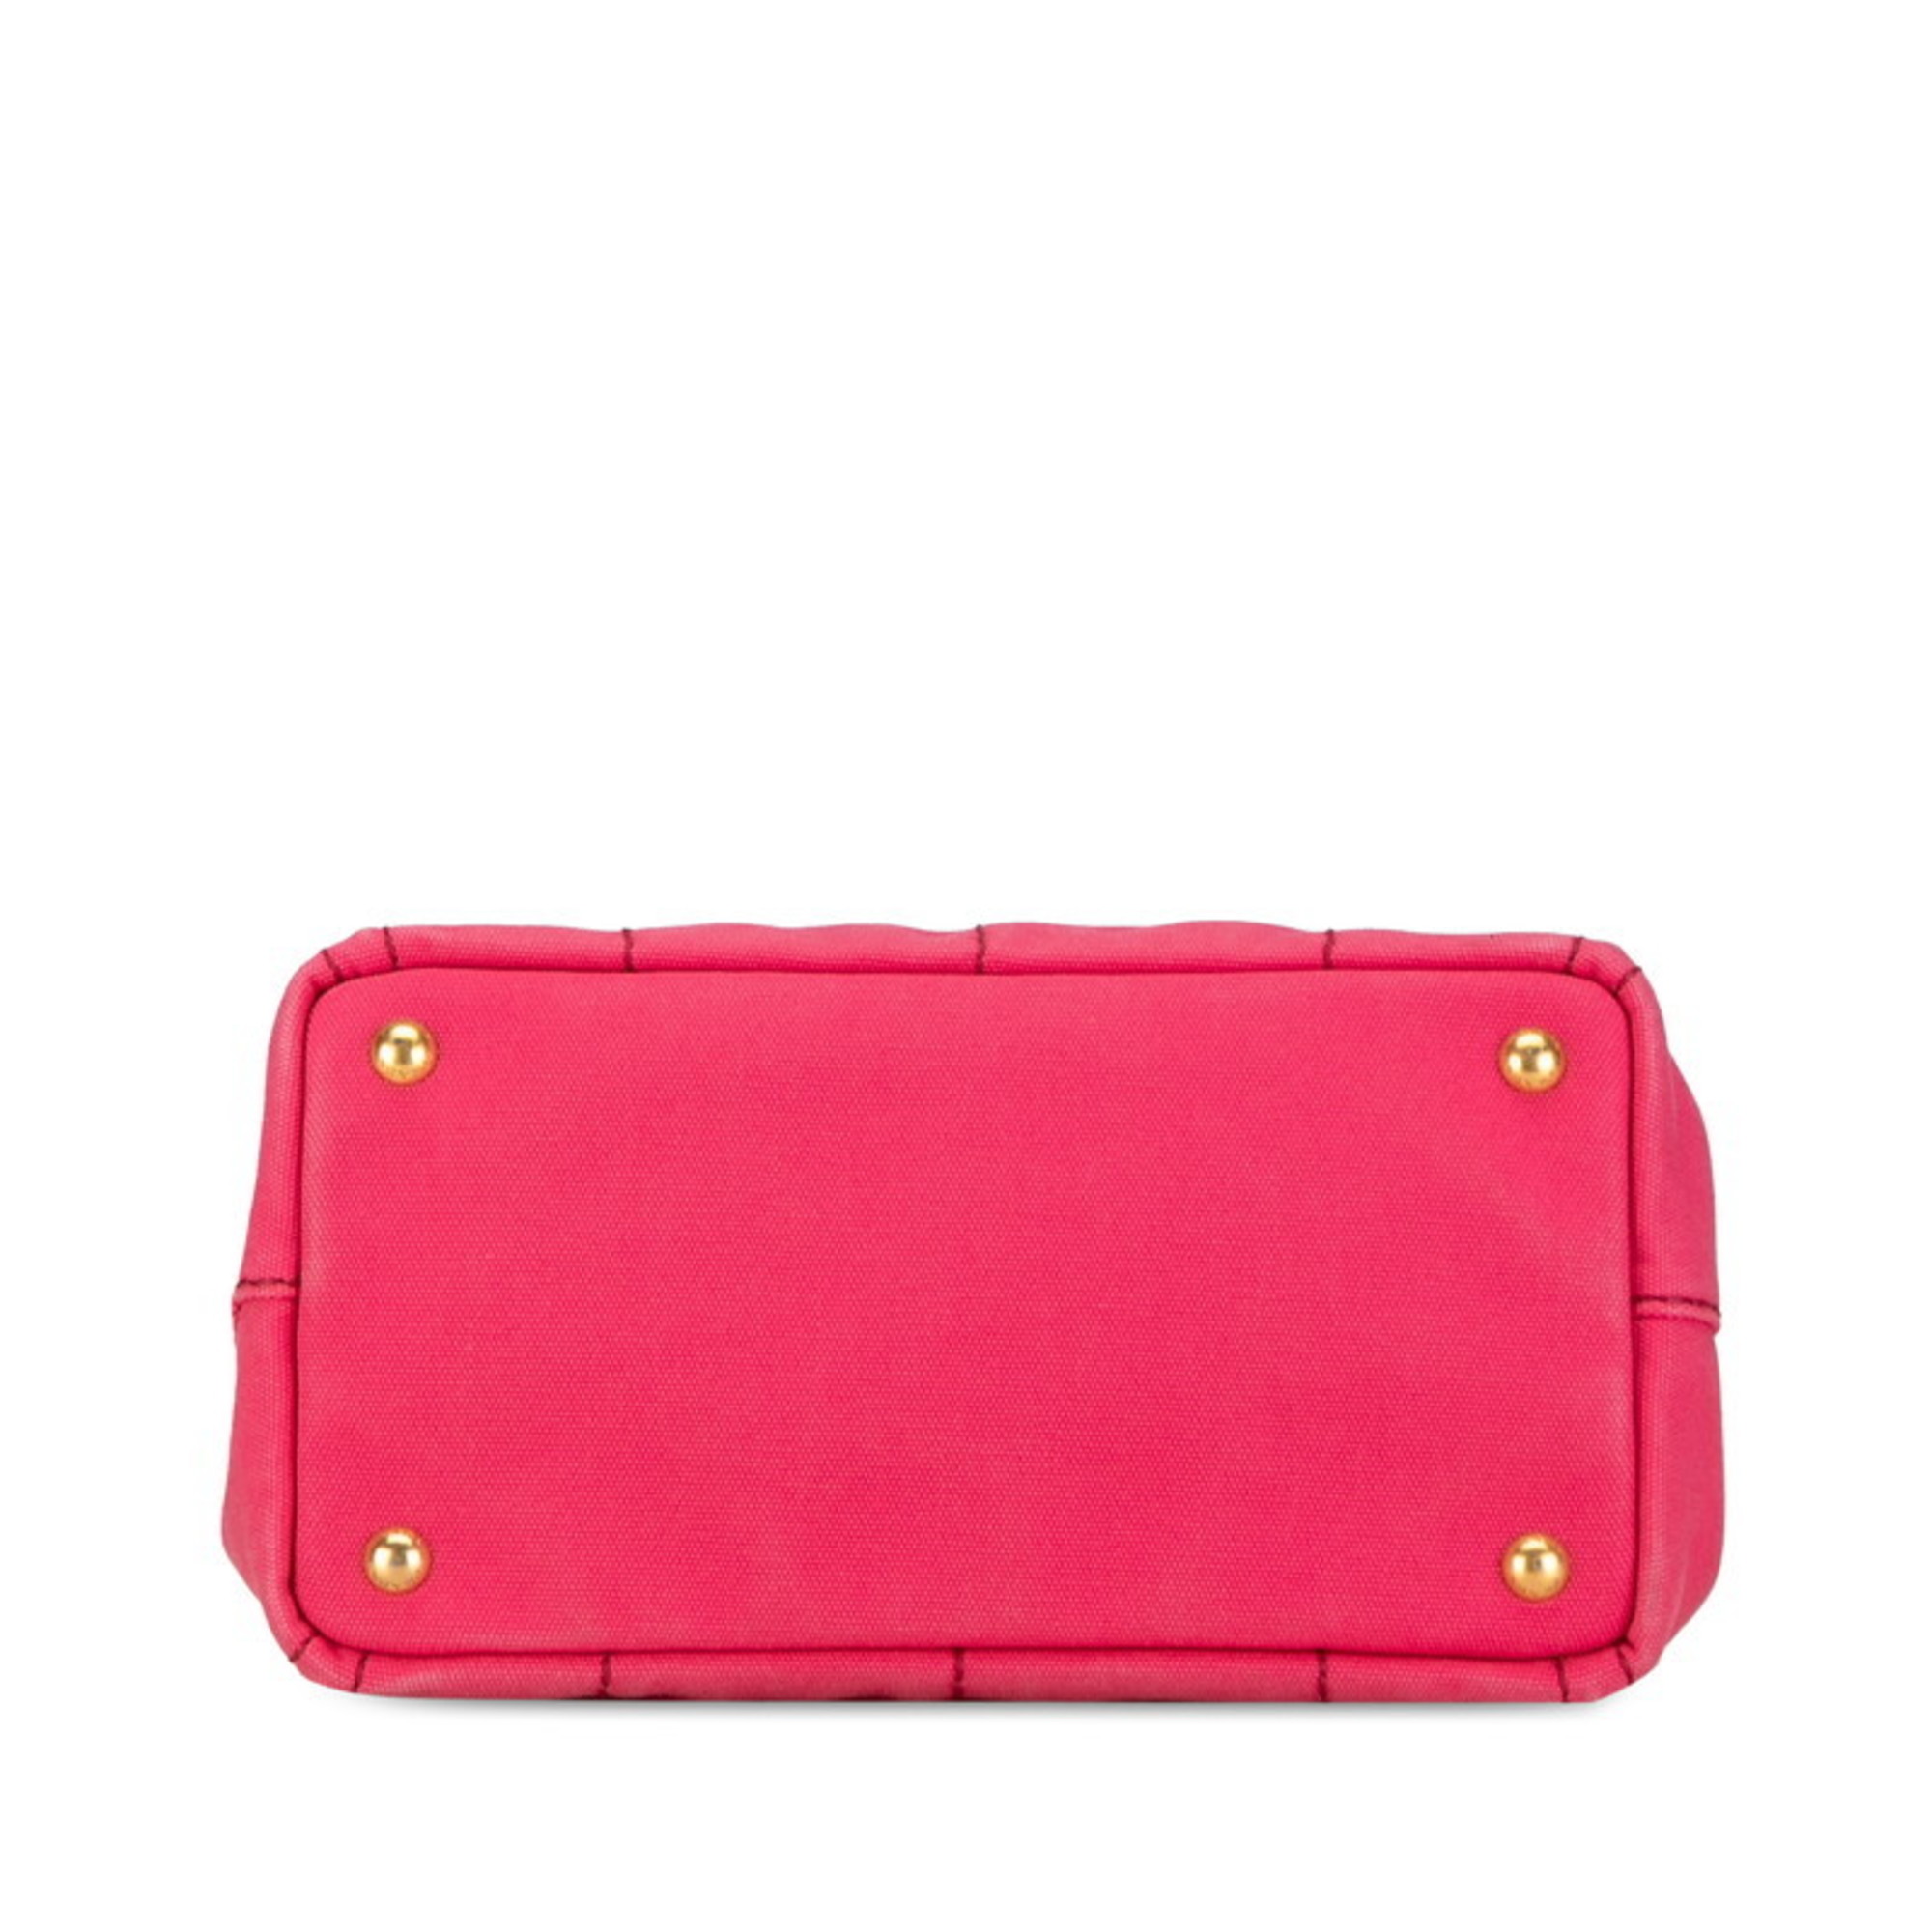 Prada Canapa XS Handbag Shoulder Bag B2439G Pink Canvas Women's PRADA